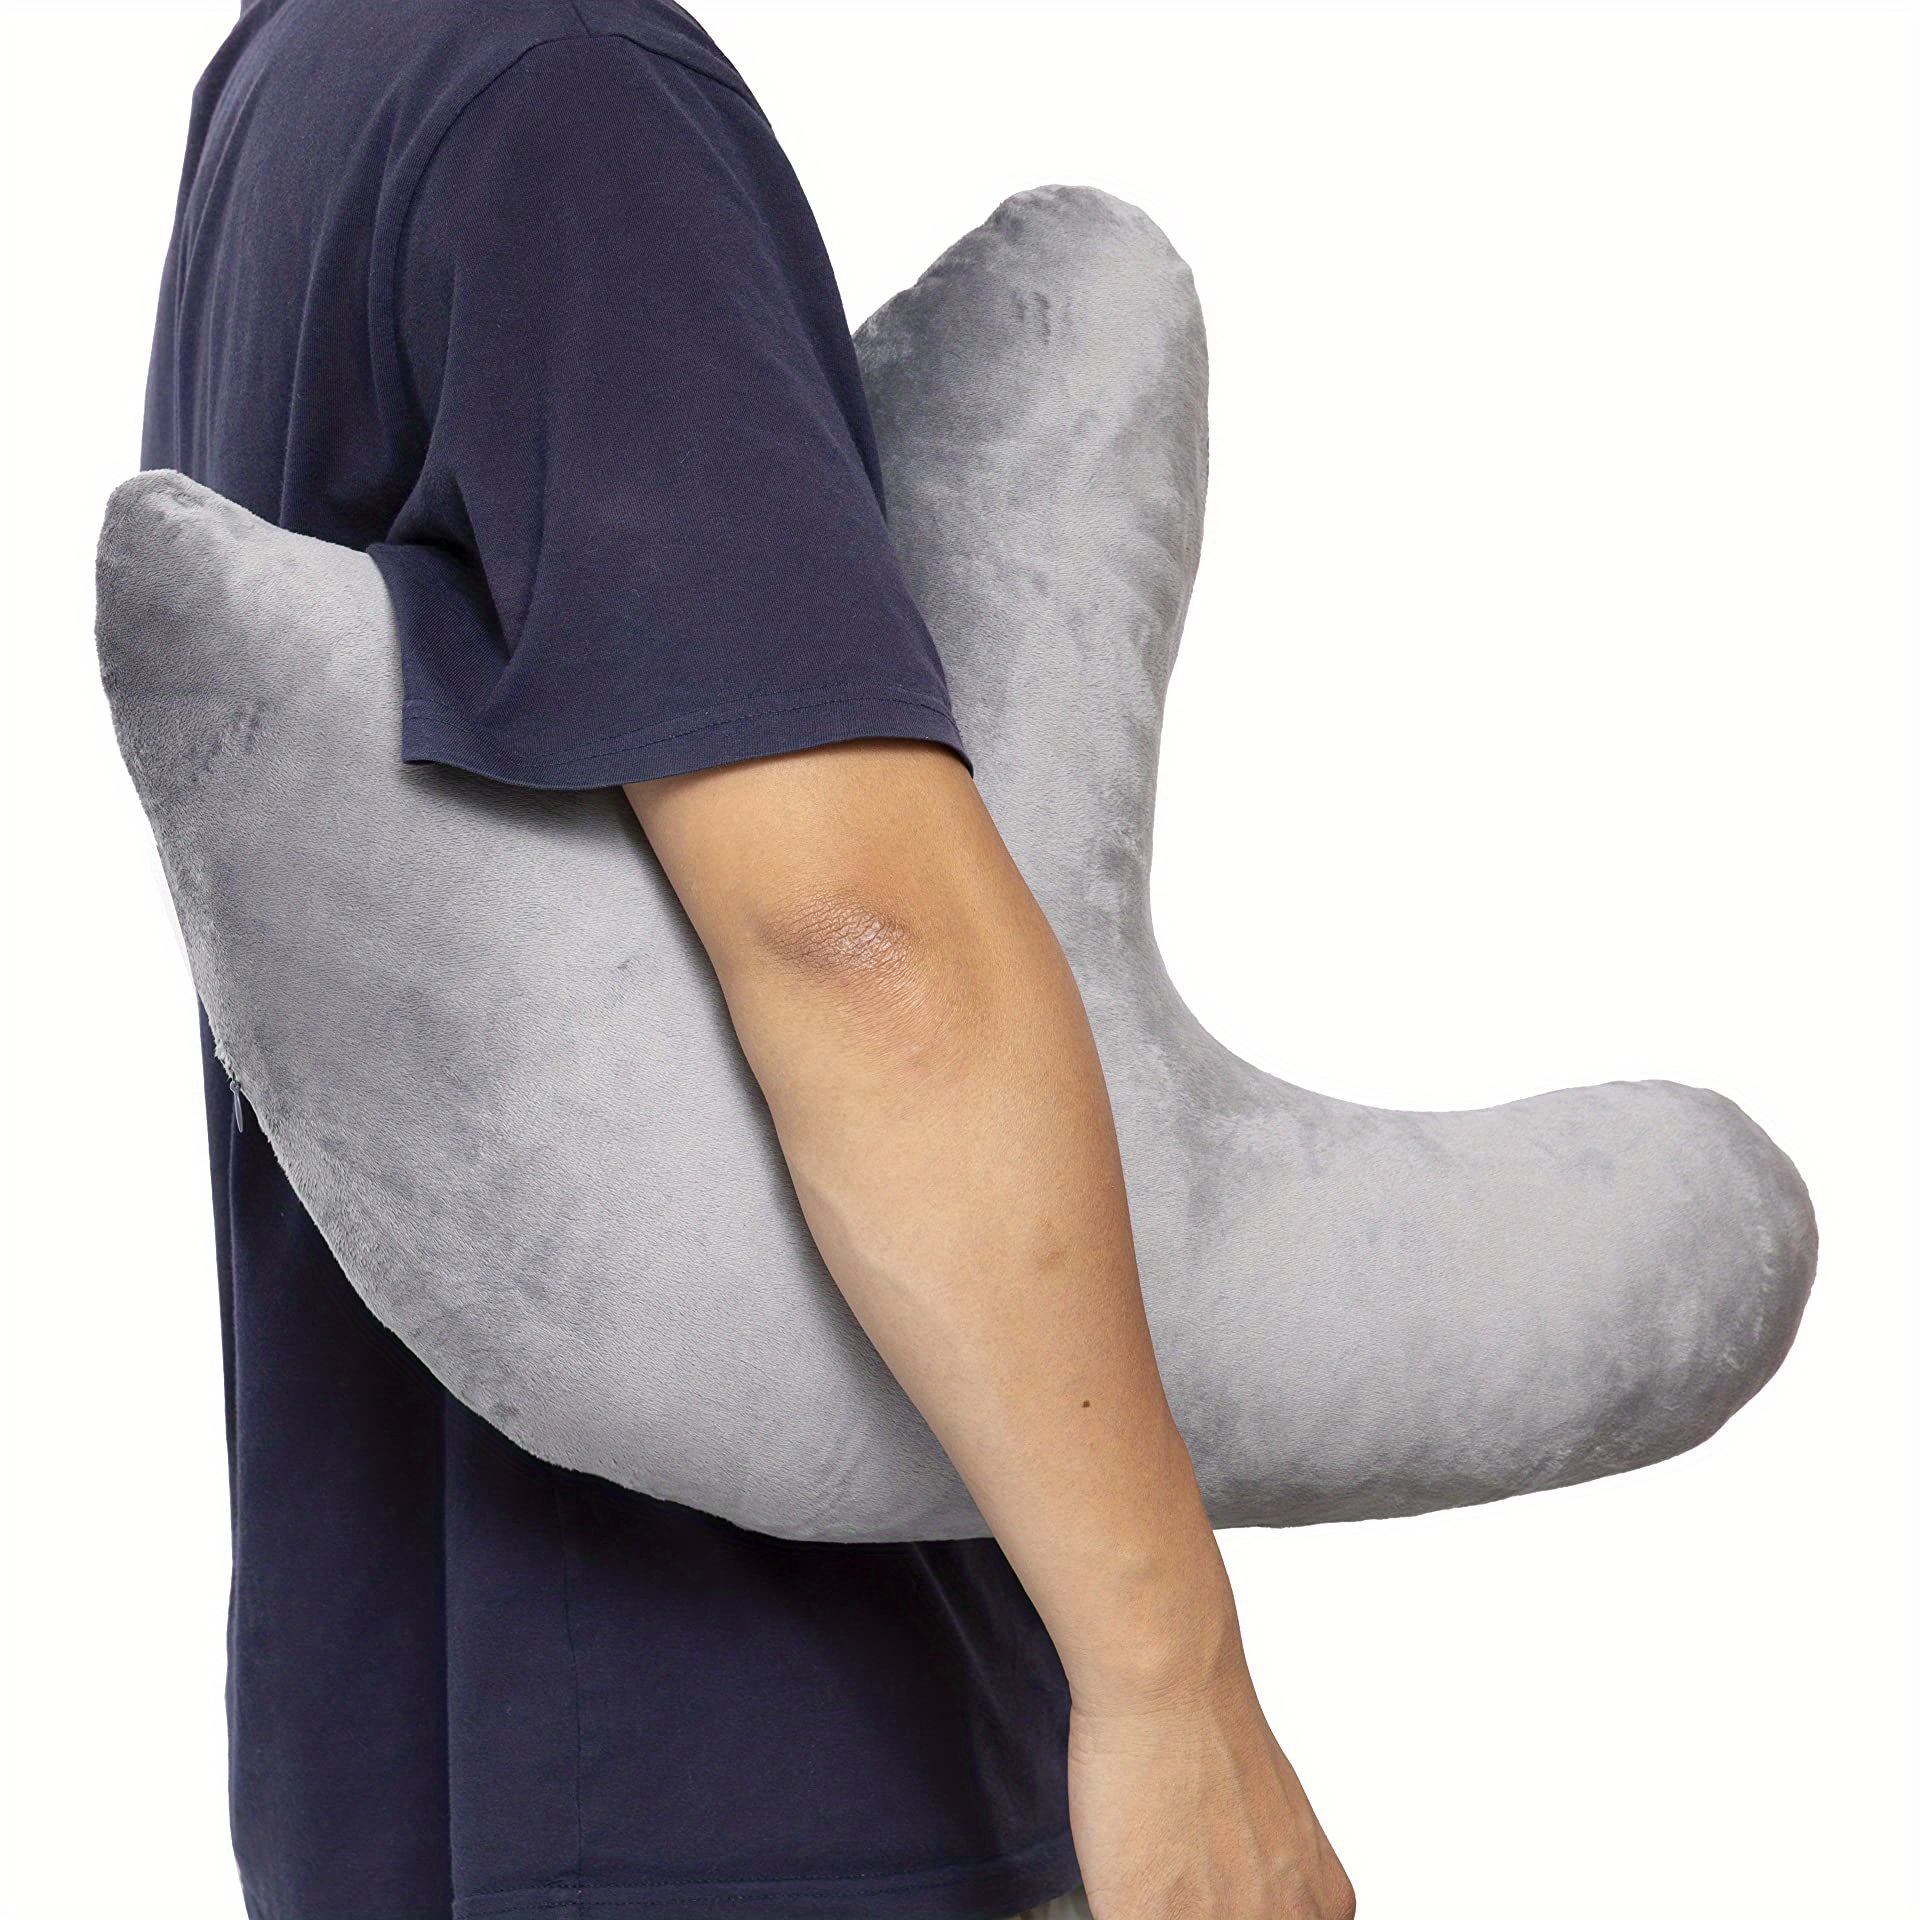  Shoulder Surgery Pillow, Rotator Cuff Pillow, Comfortable  Shoulder Brace Pillow for Sleeping, Shoulder Pain Relief Pillow, Side  Sleeper Pillow for Shoulder Pain Arm Support Pillow After Surgery : Health  & Household